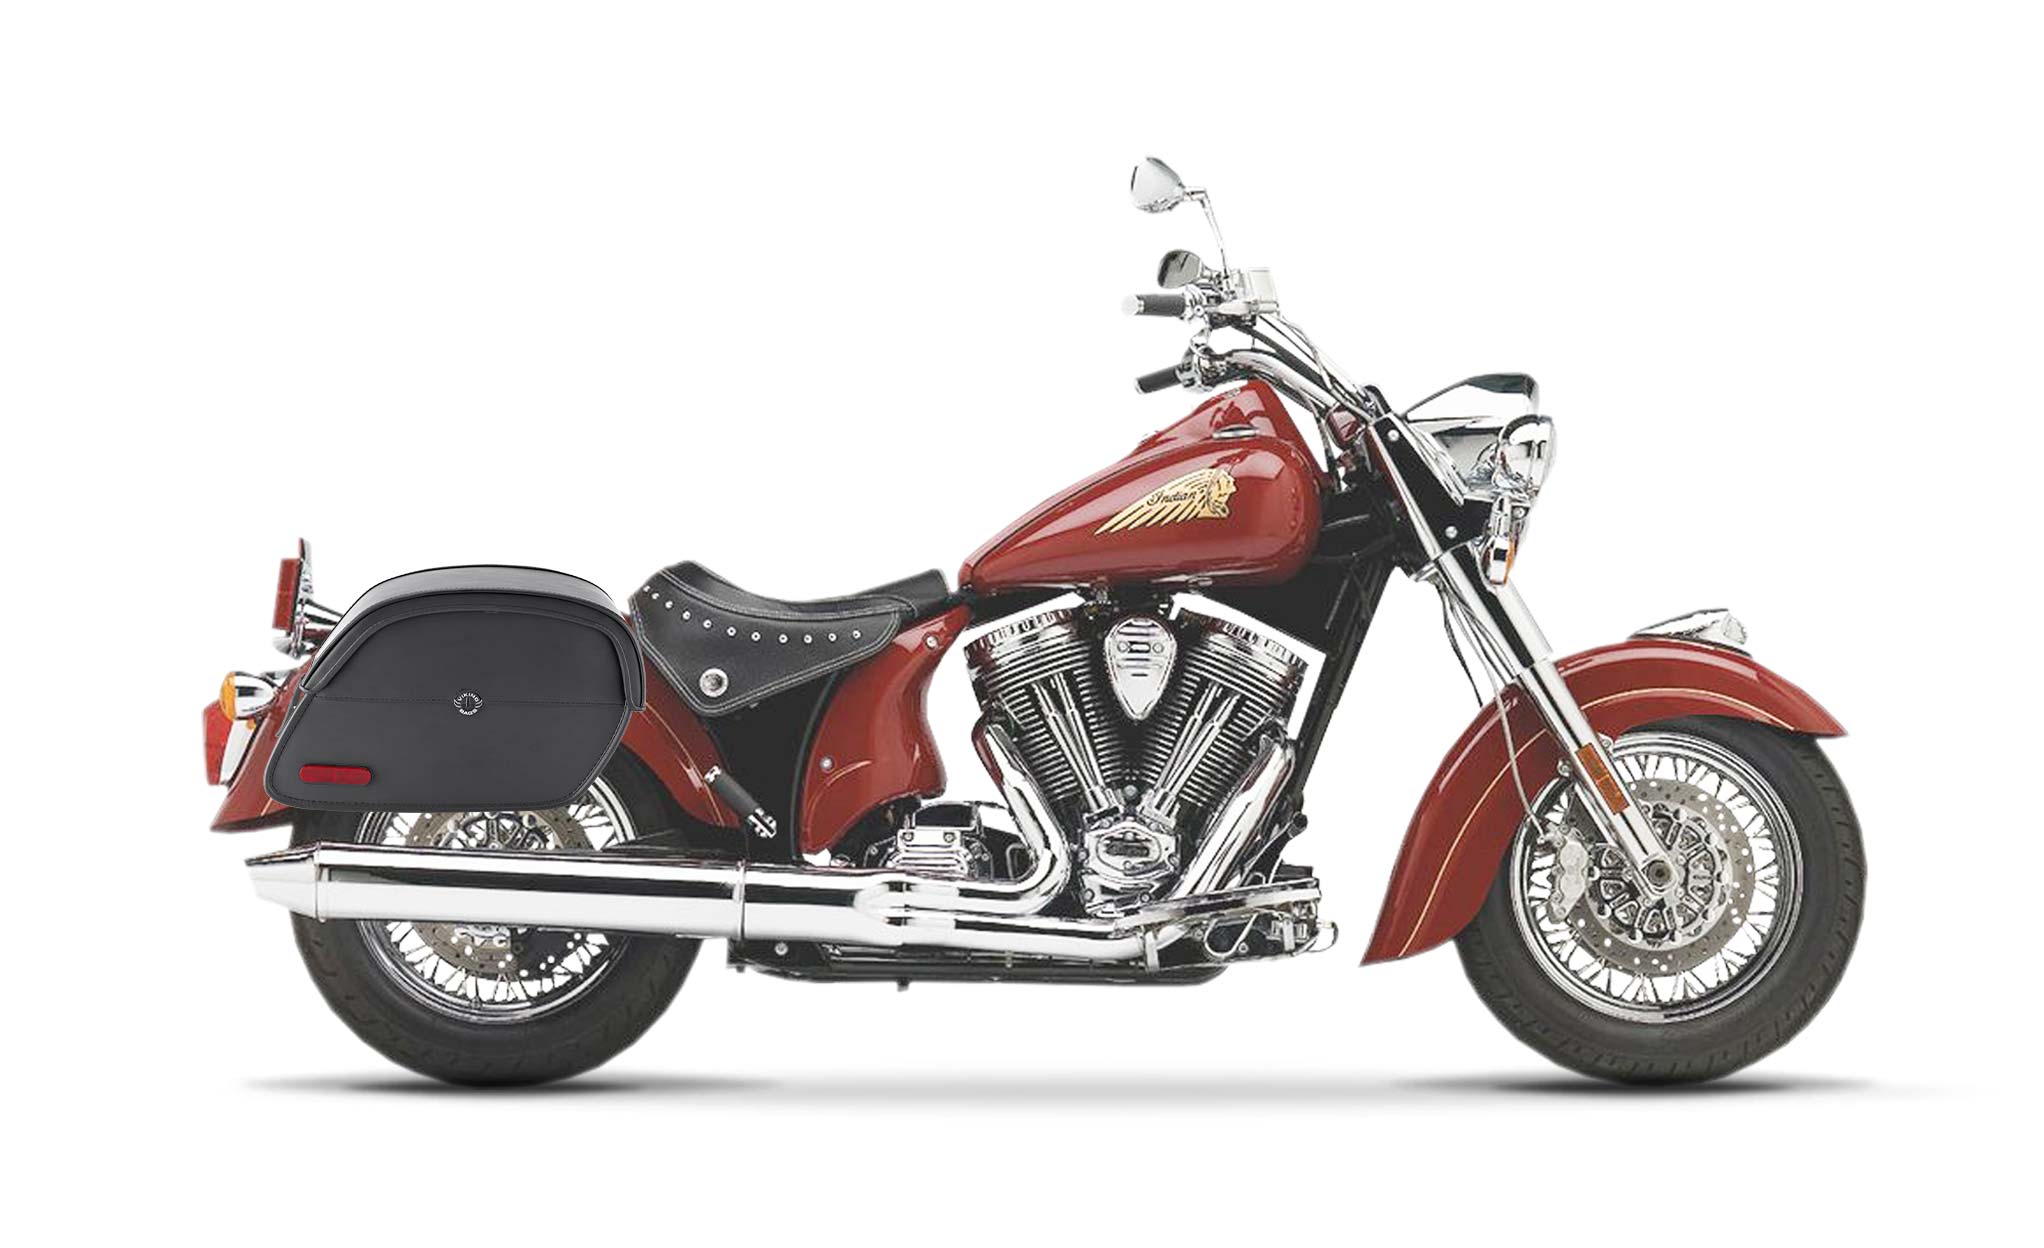 Viking California Large Indian Chief Standard Leather Motorcycle Saddlebags on Bike Photo @expand